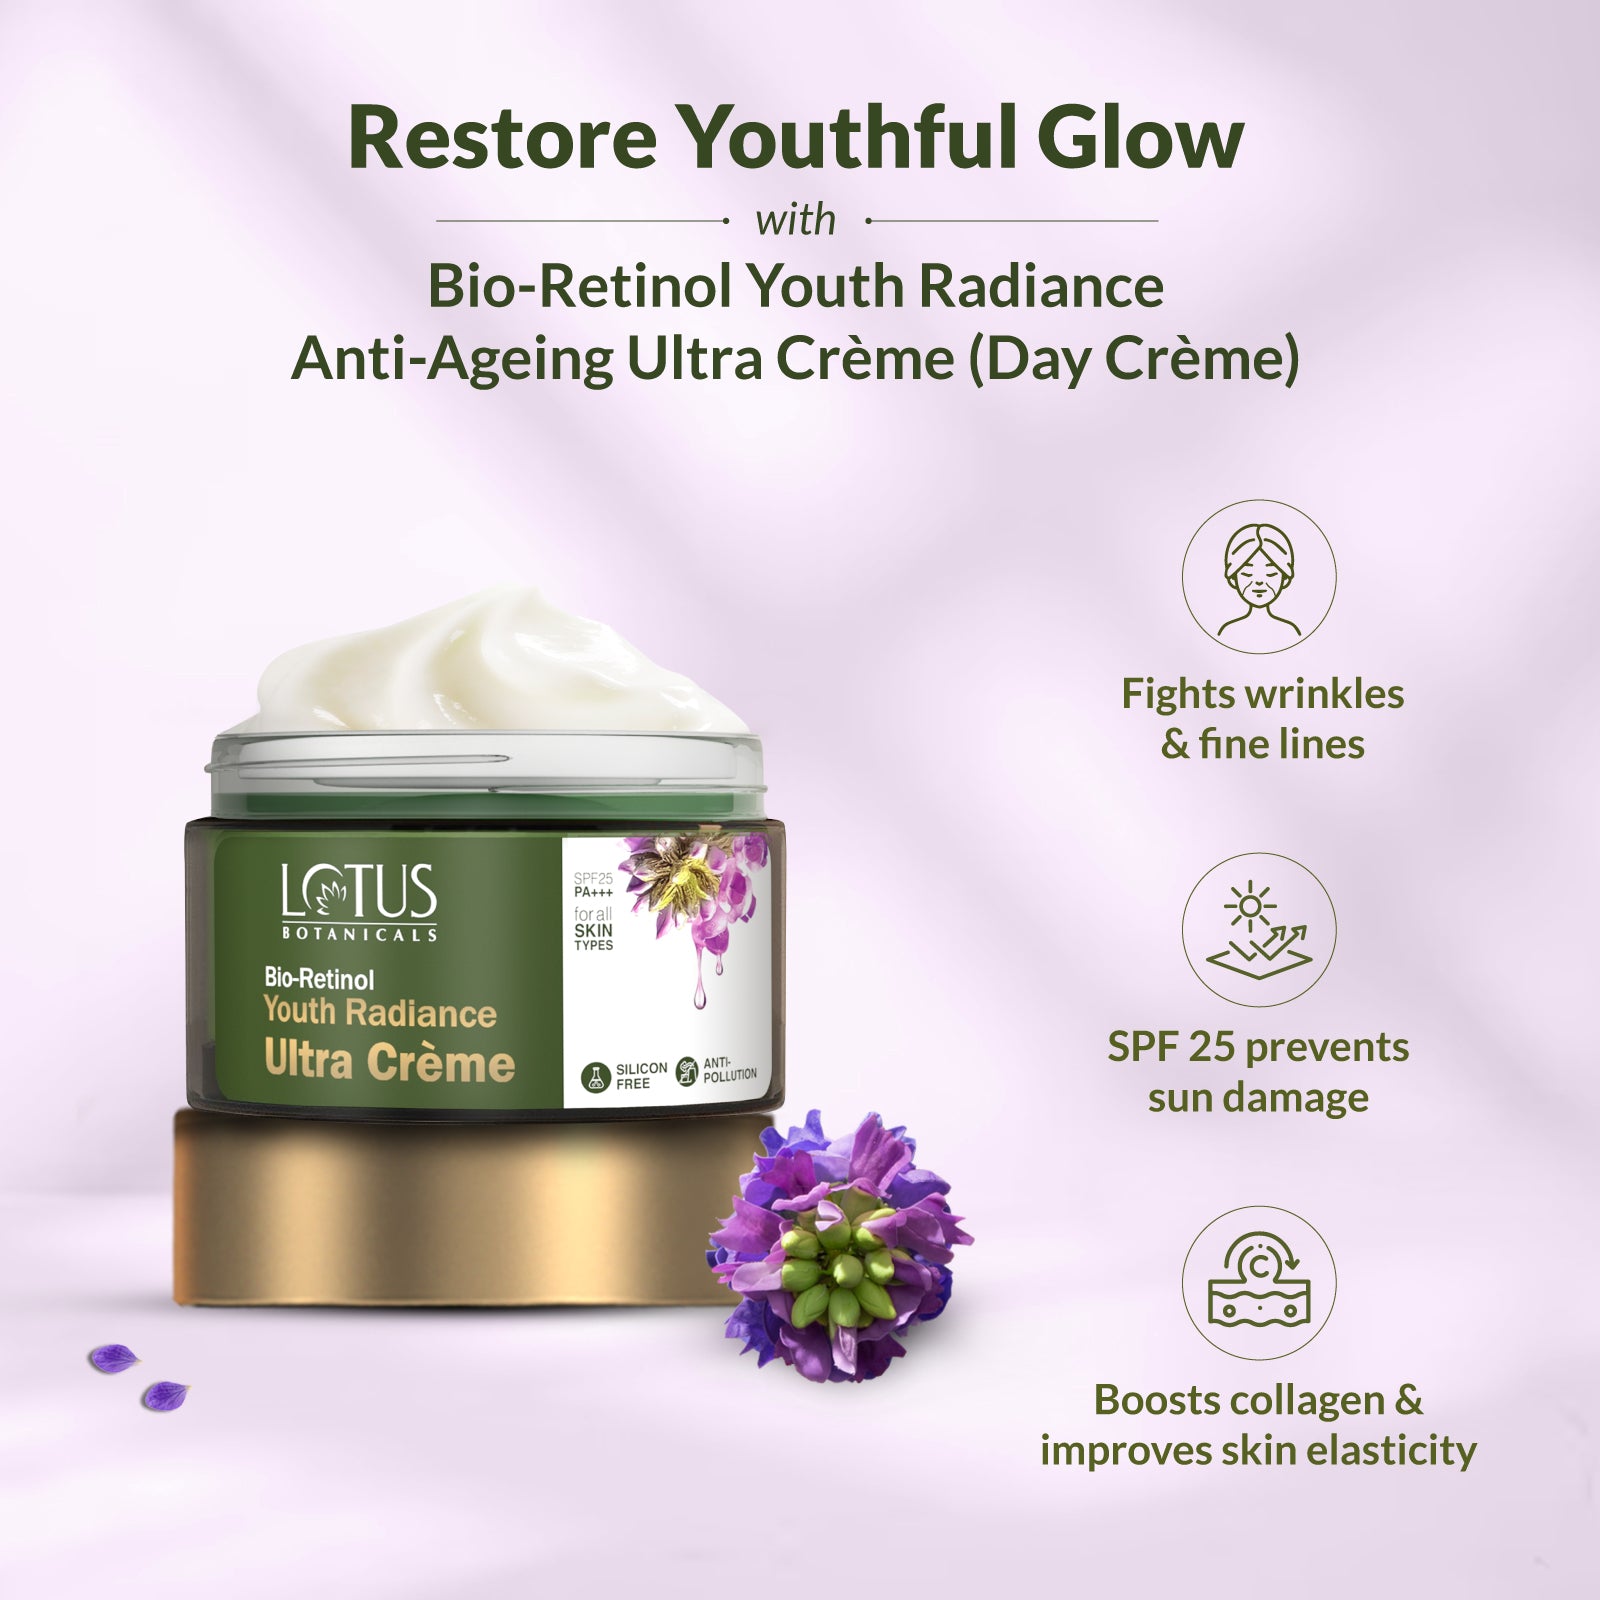 Bio-Retinol Youth Radiance Anti-Ageing Ultra Crème